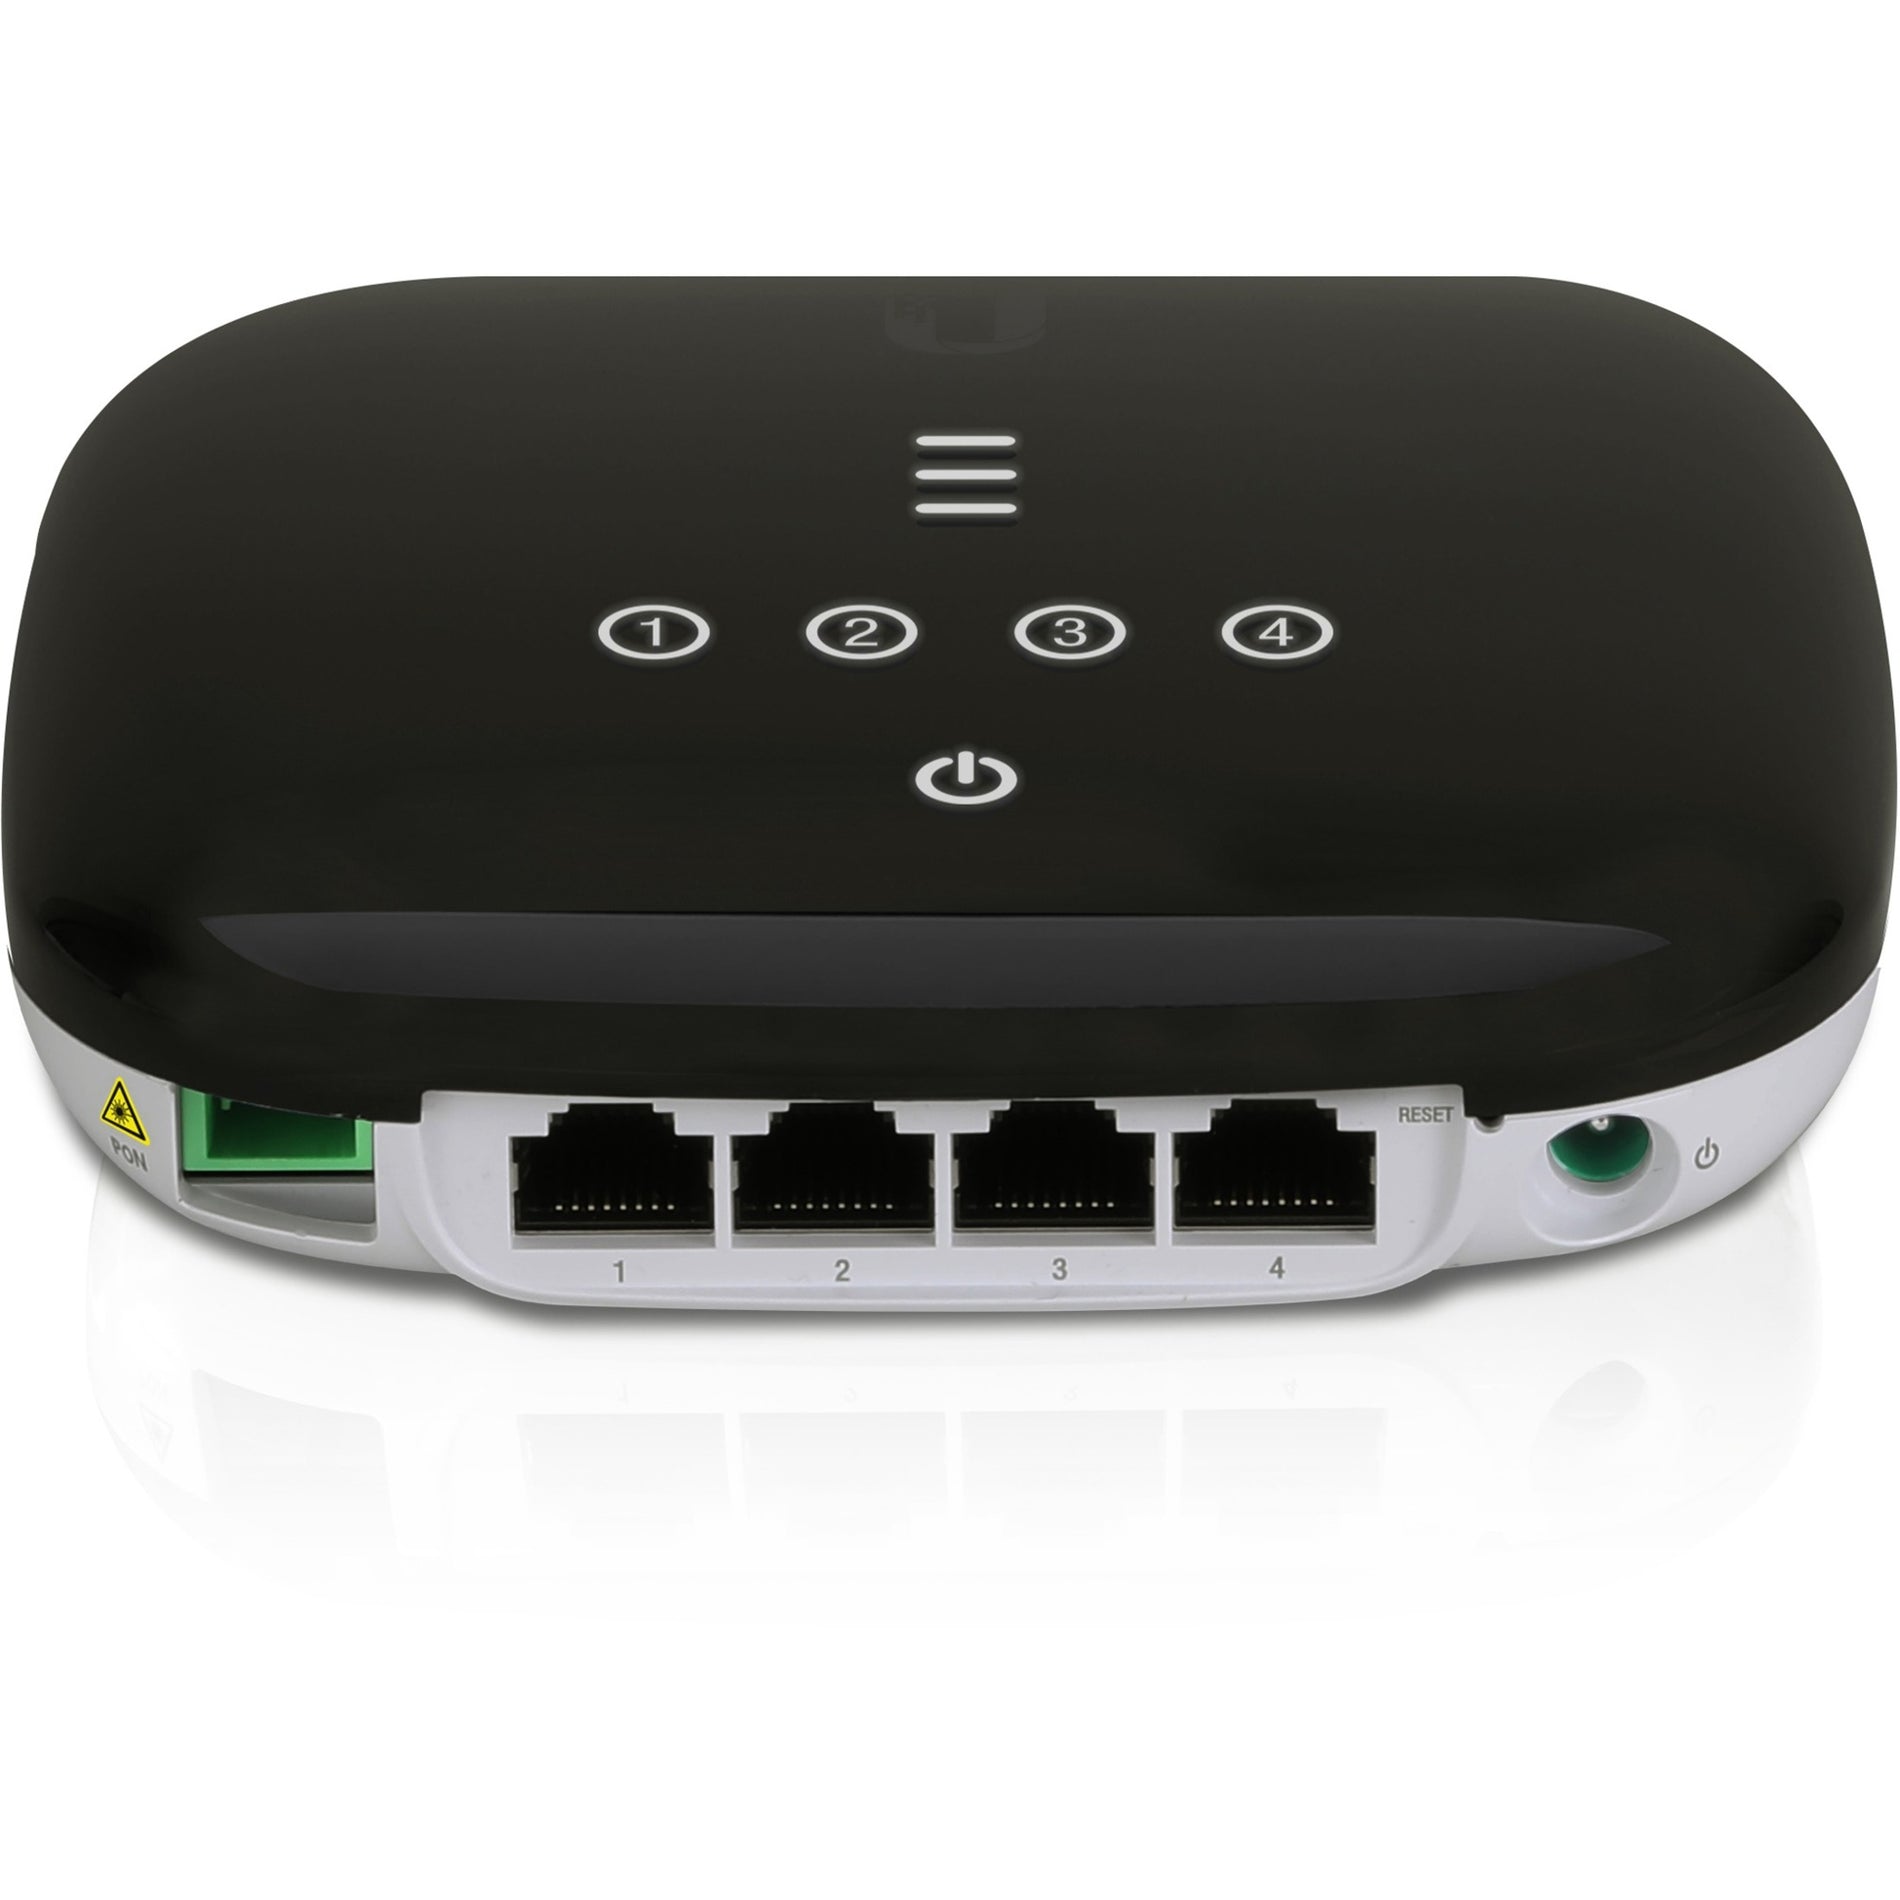 Ubiquiti UF-WIFI-US UFiber LOCO 4N 4-Port GPON Router with Wi-Fi, Gigabit Ethernet, 2 Year Limited Warranty